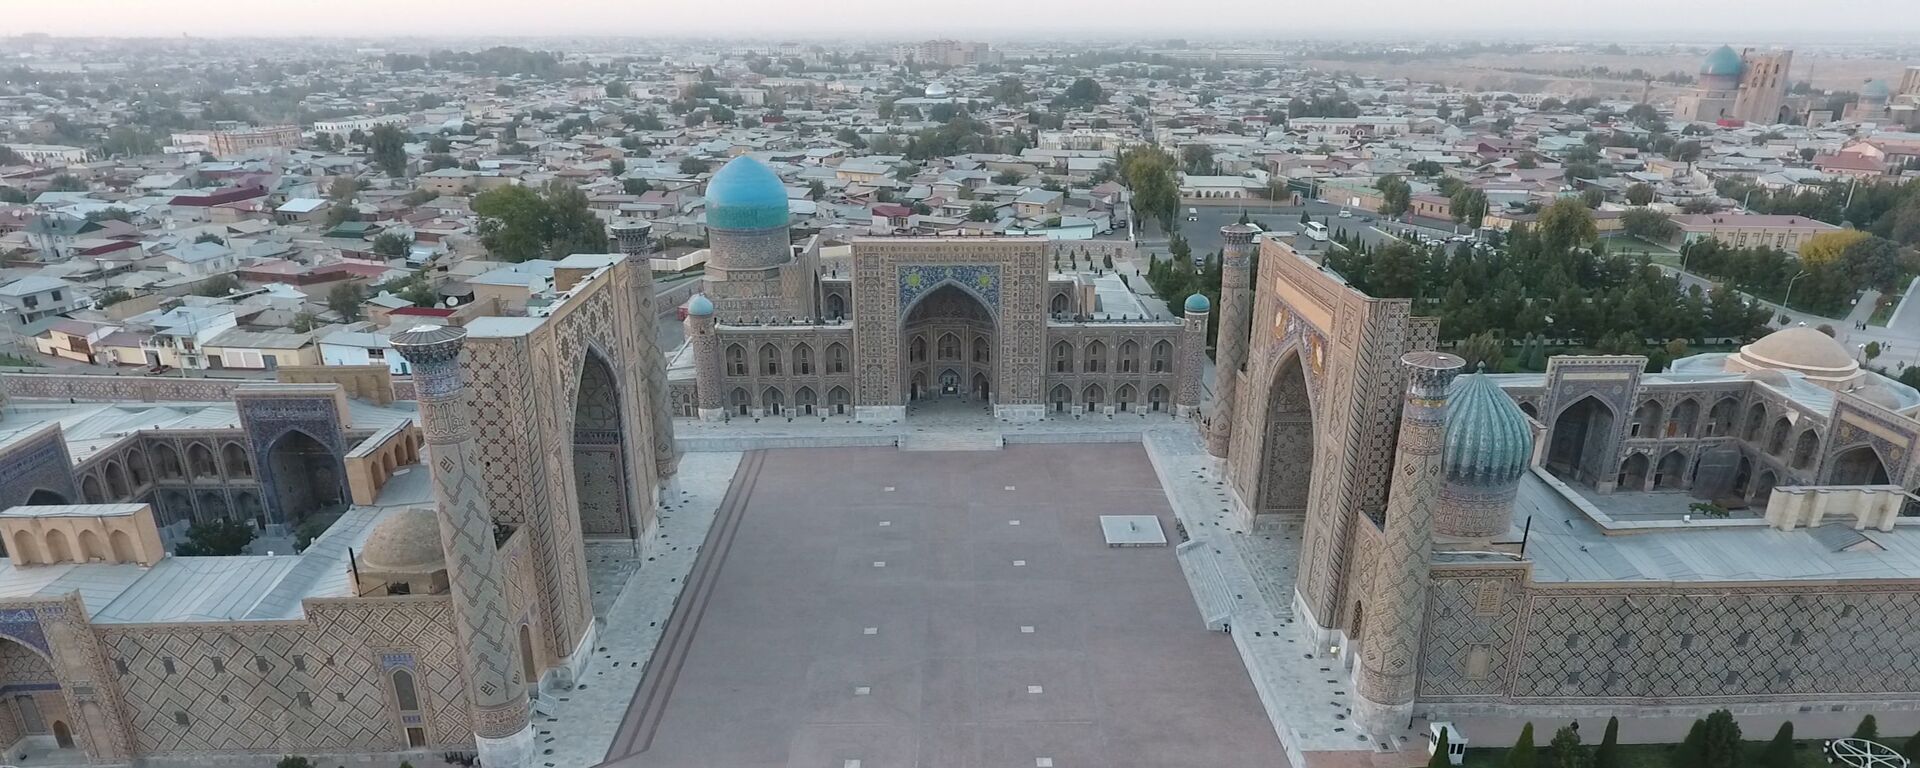 Вид сверху на площадь Регистан в Самарканде - Sputnik Ўзбекистон, 1920, 02.02.2021